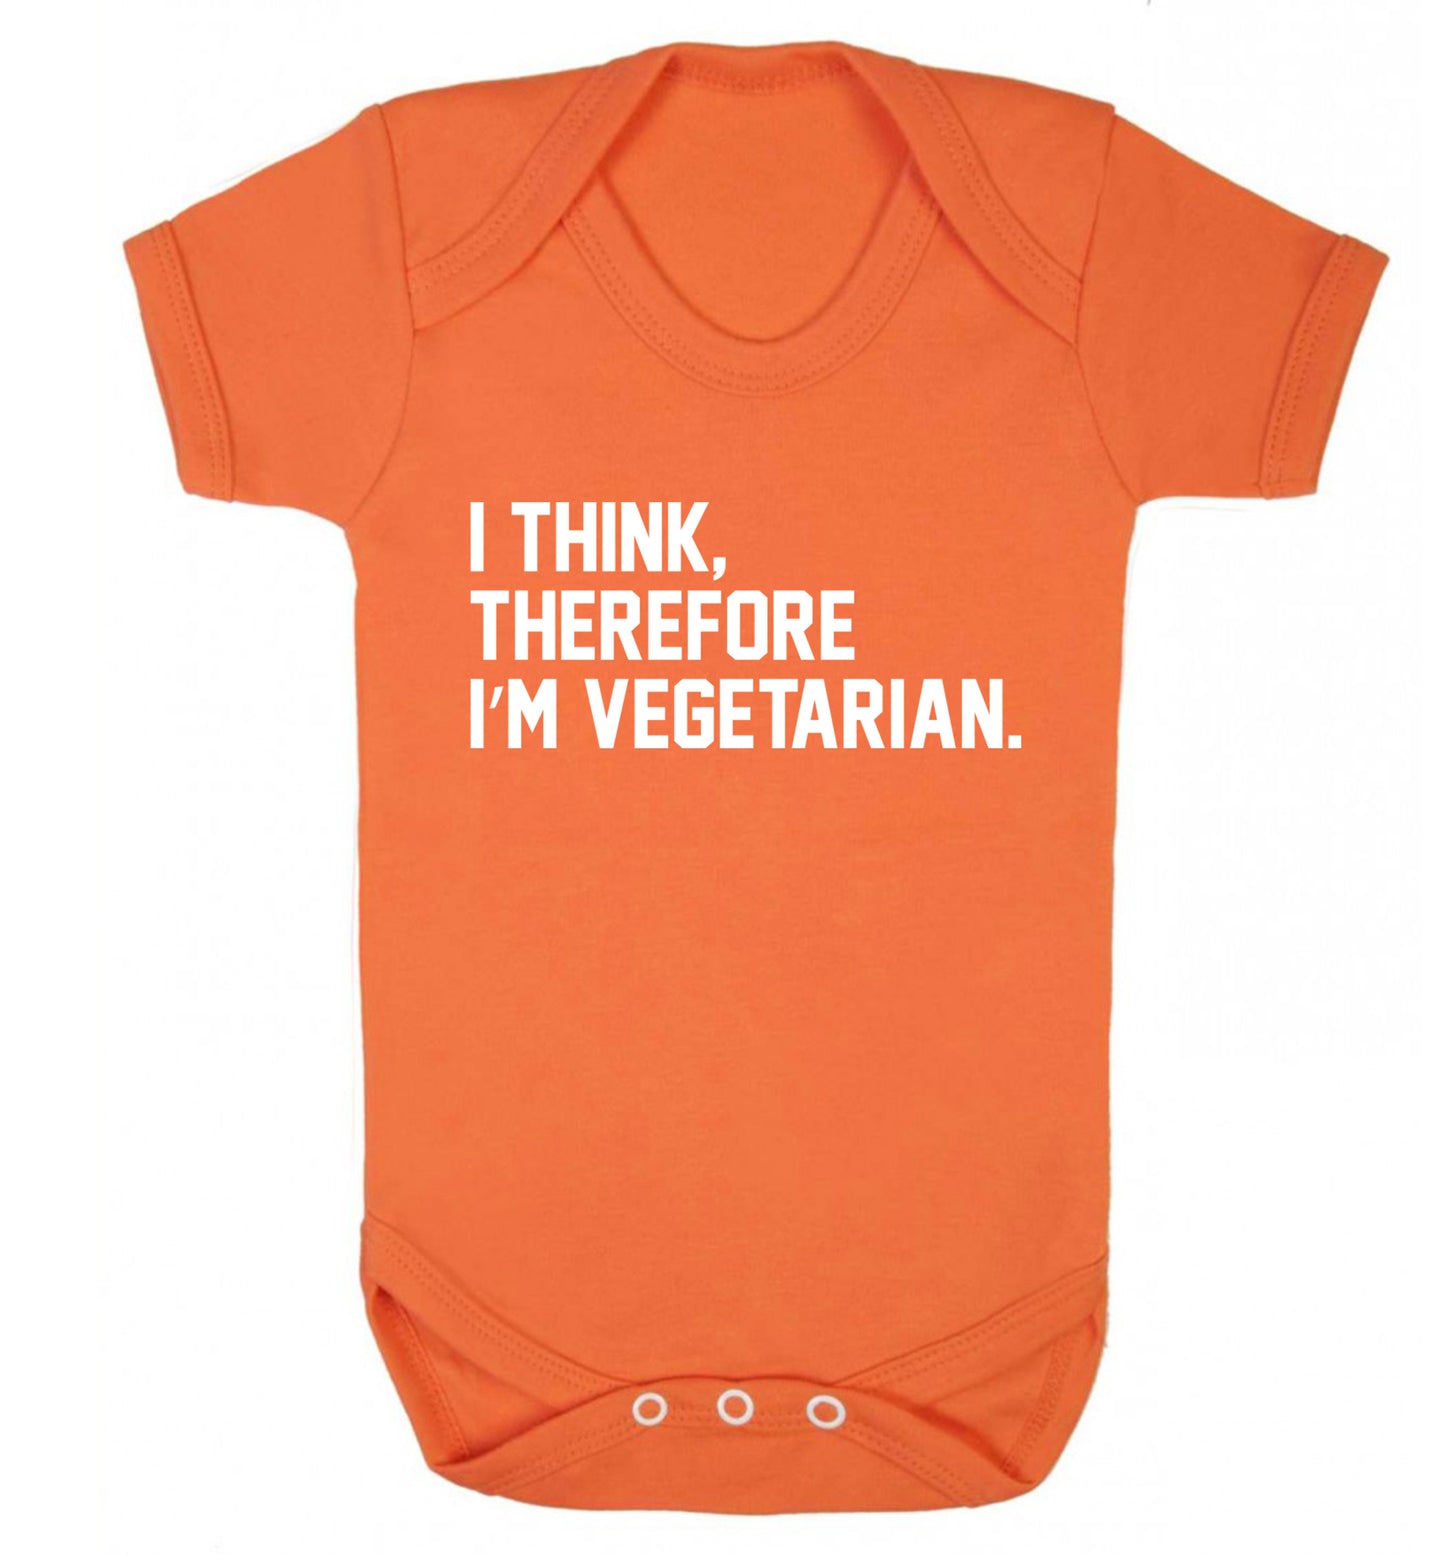 I think therefore I'm vegetarian Baby Vest orange 18-24 months